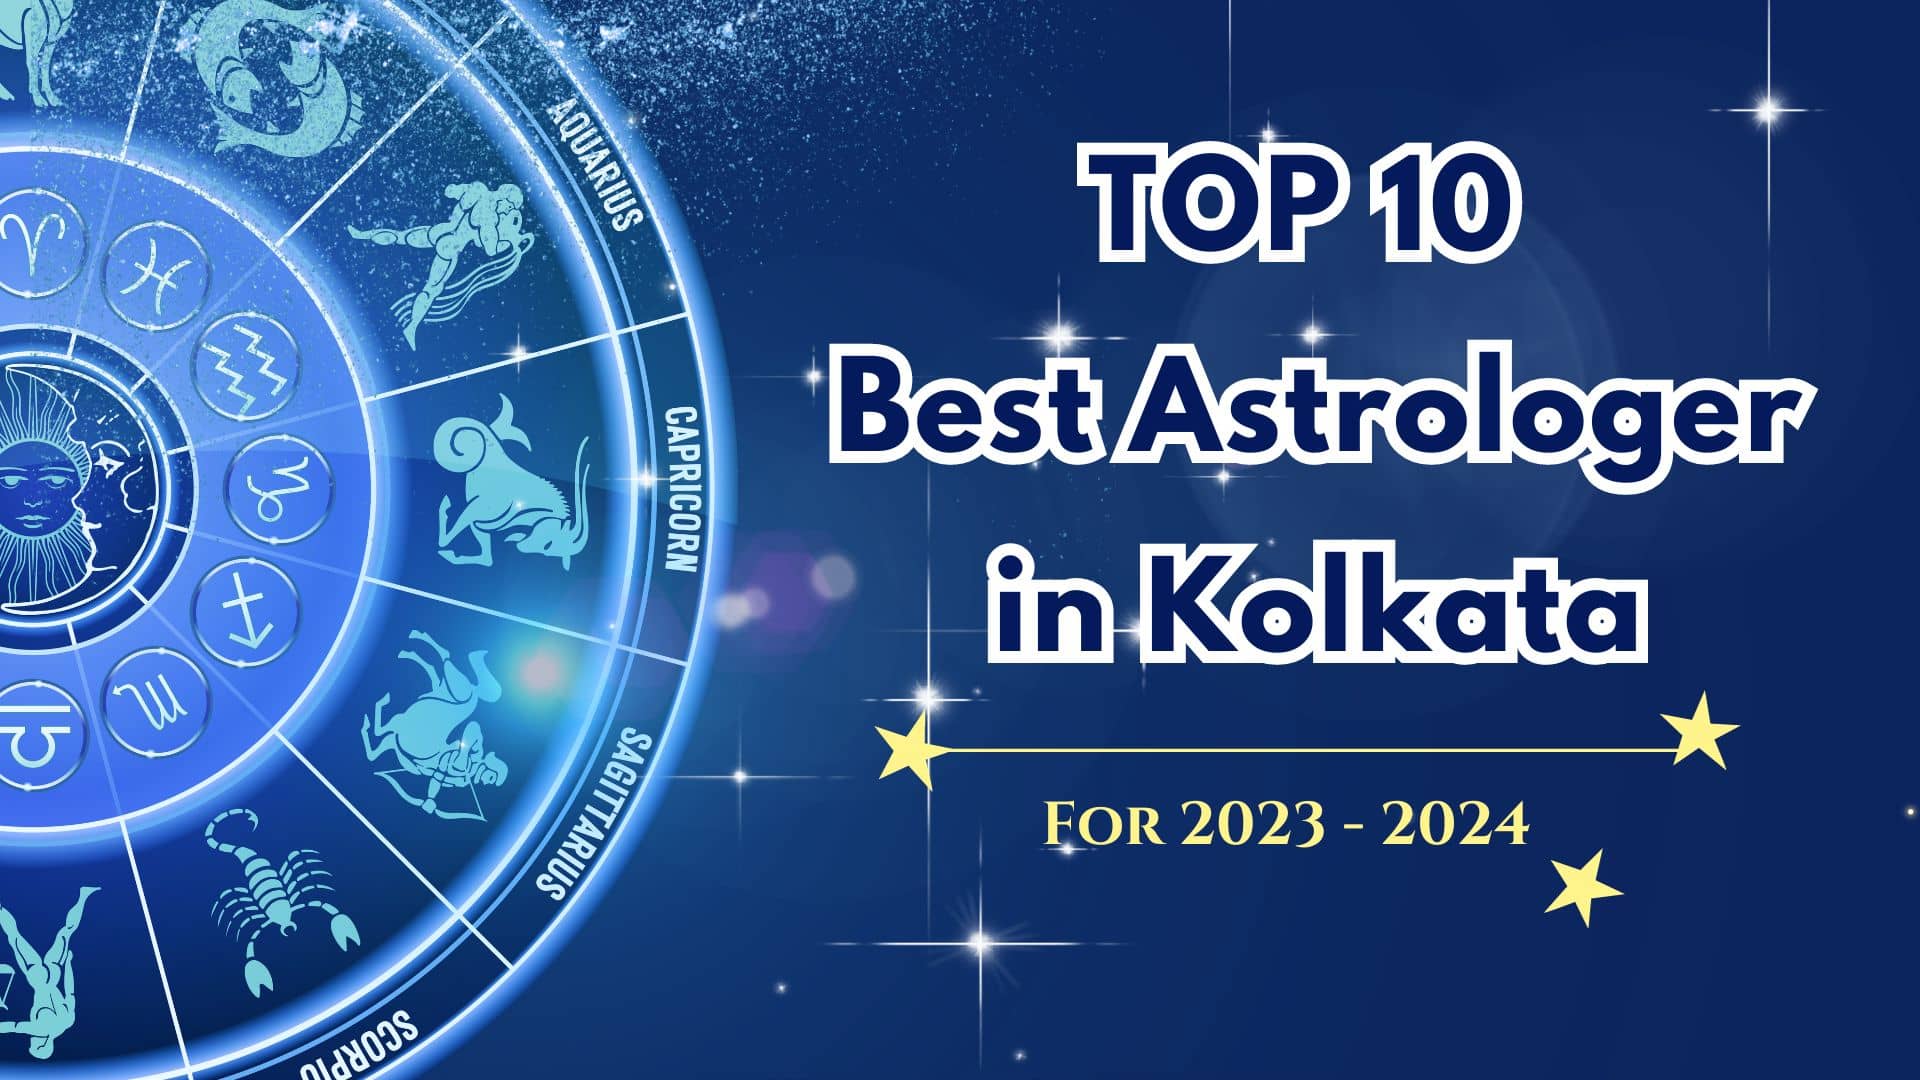 TOP 10 Best Astrologer in Kolkata